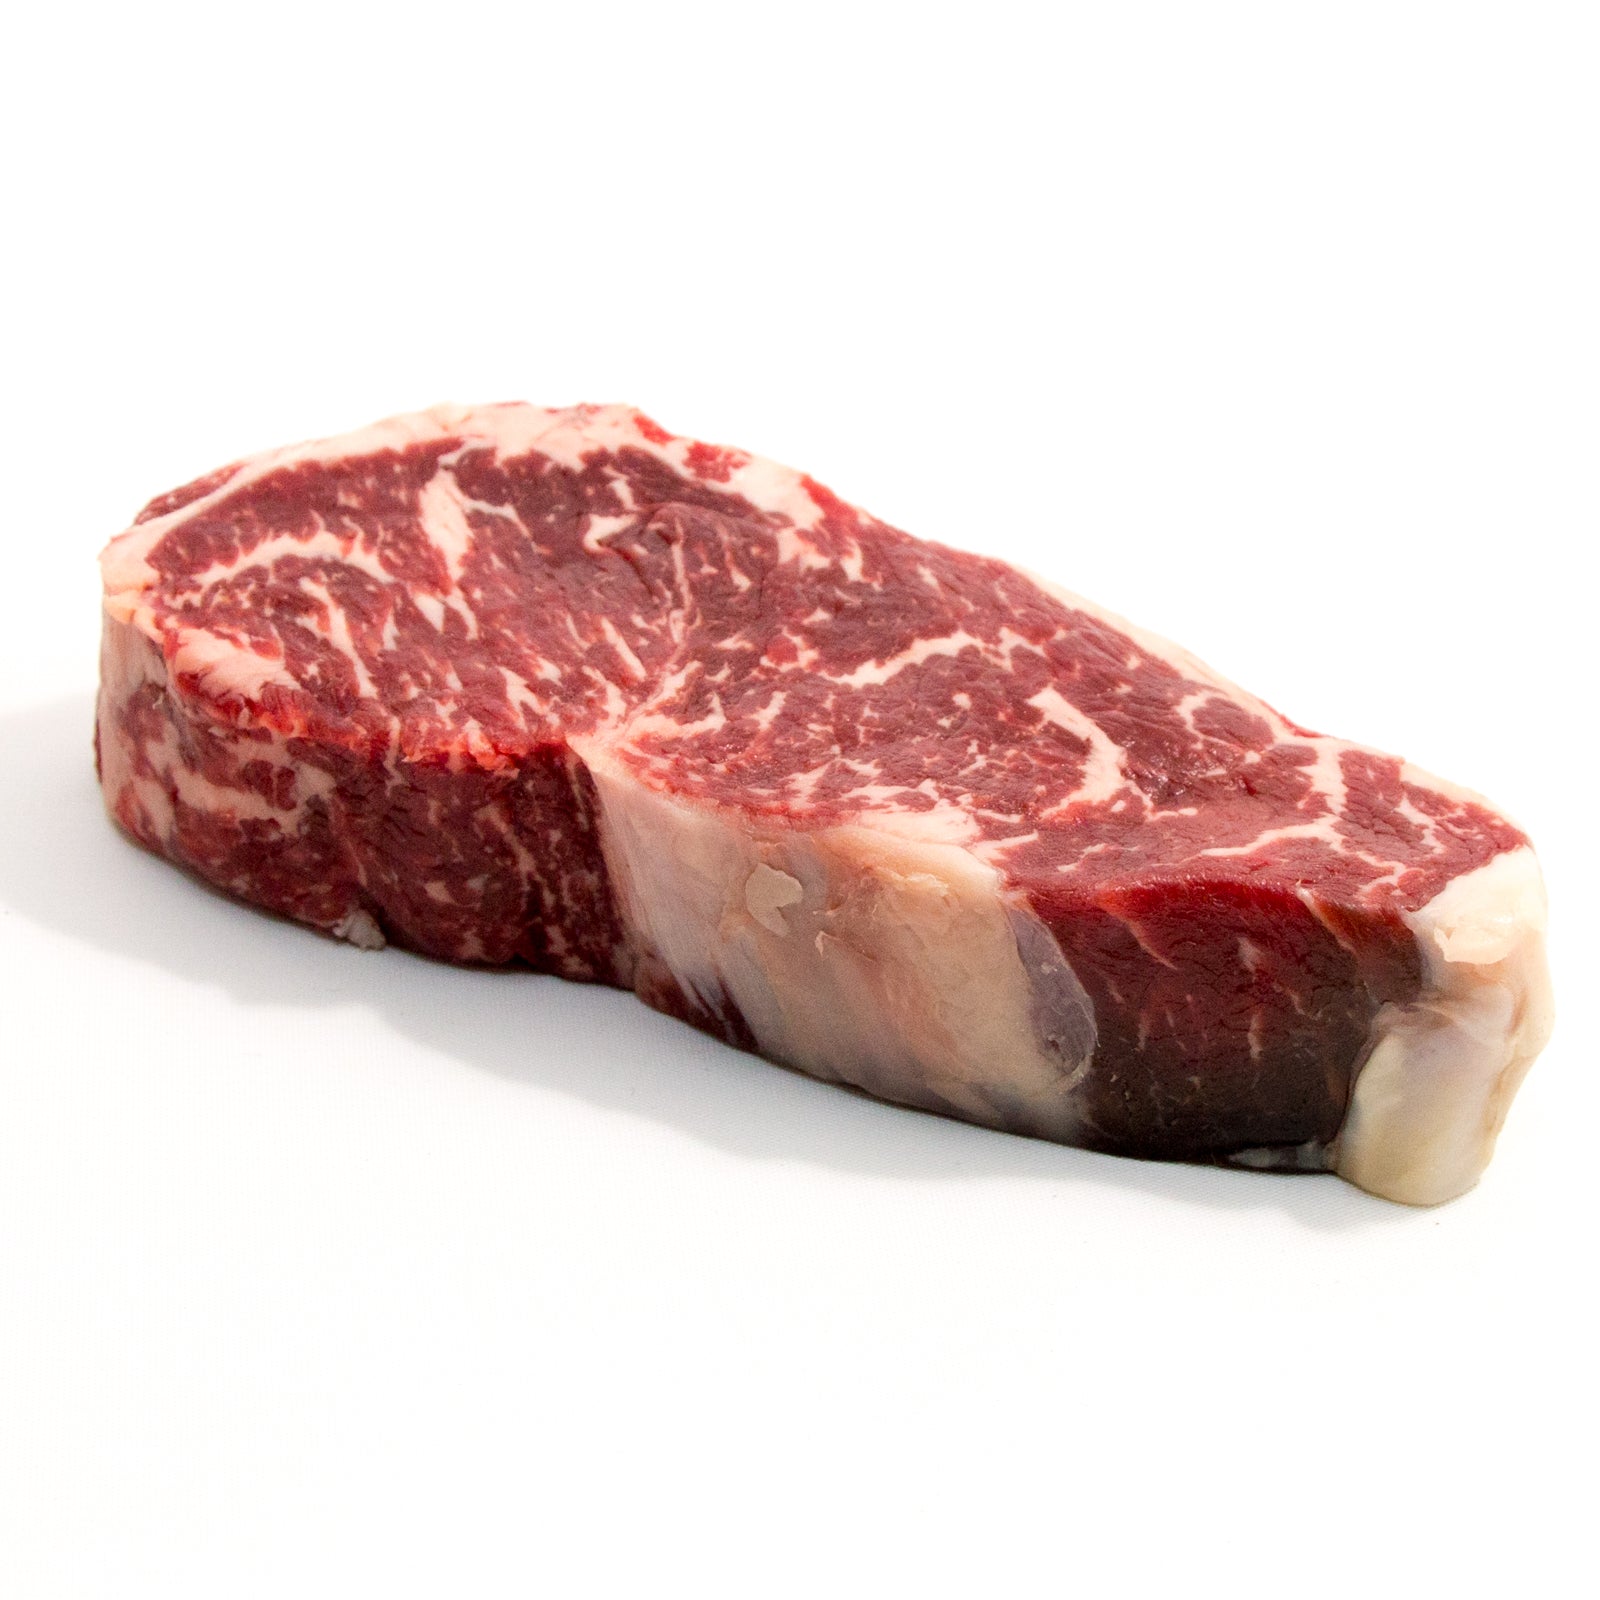 THICK CUT NY Striploin Steak (Grass Fed) - Ottawa Valley Meats